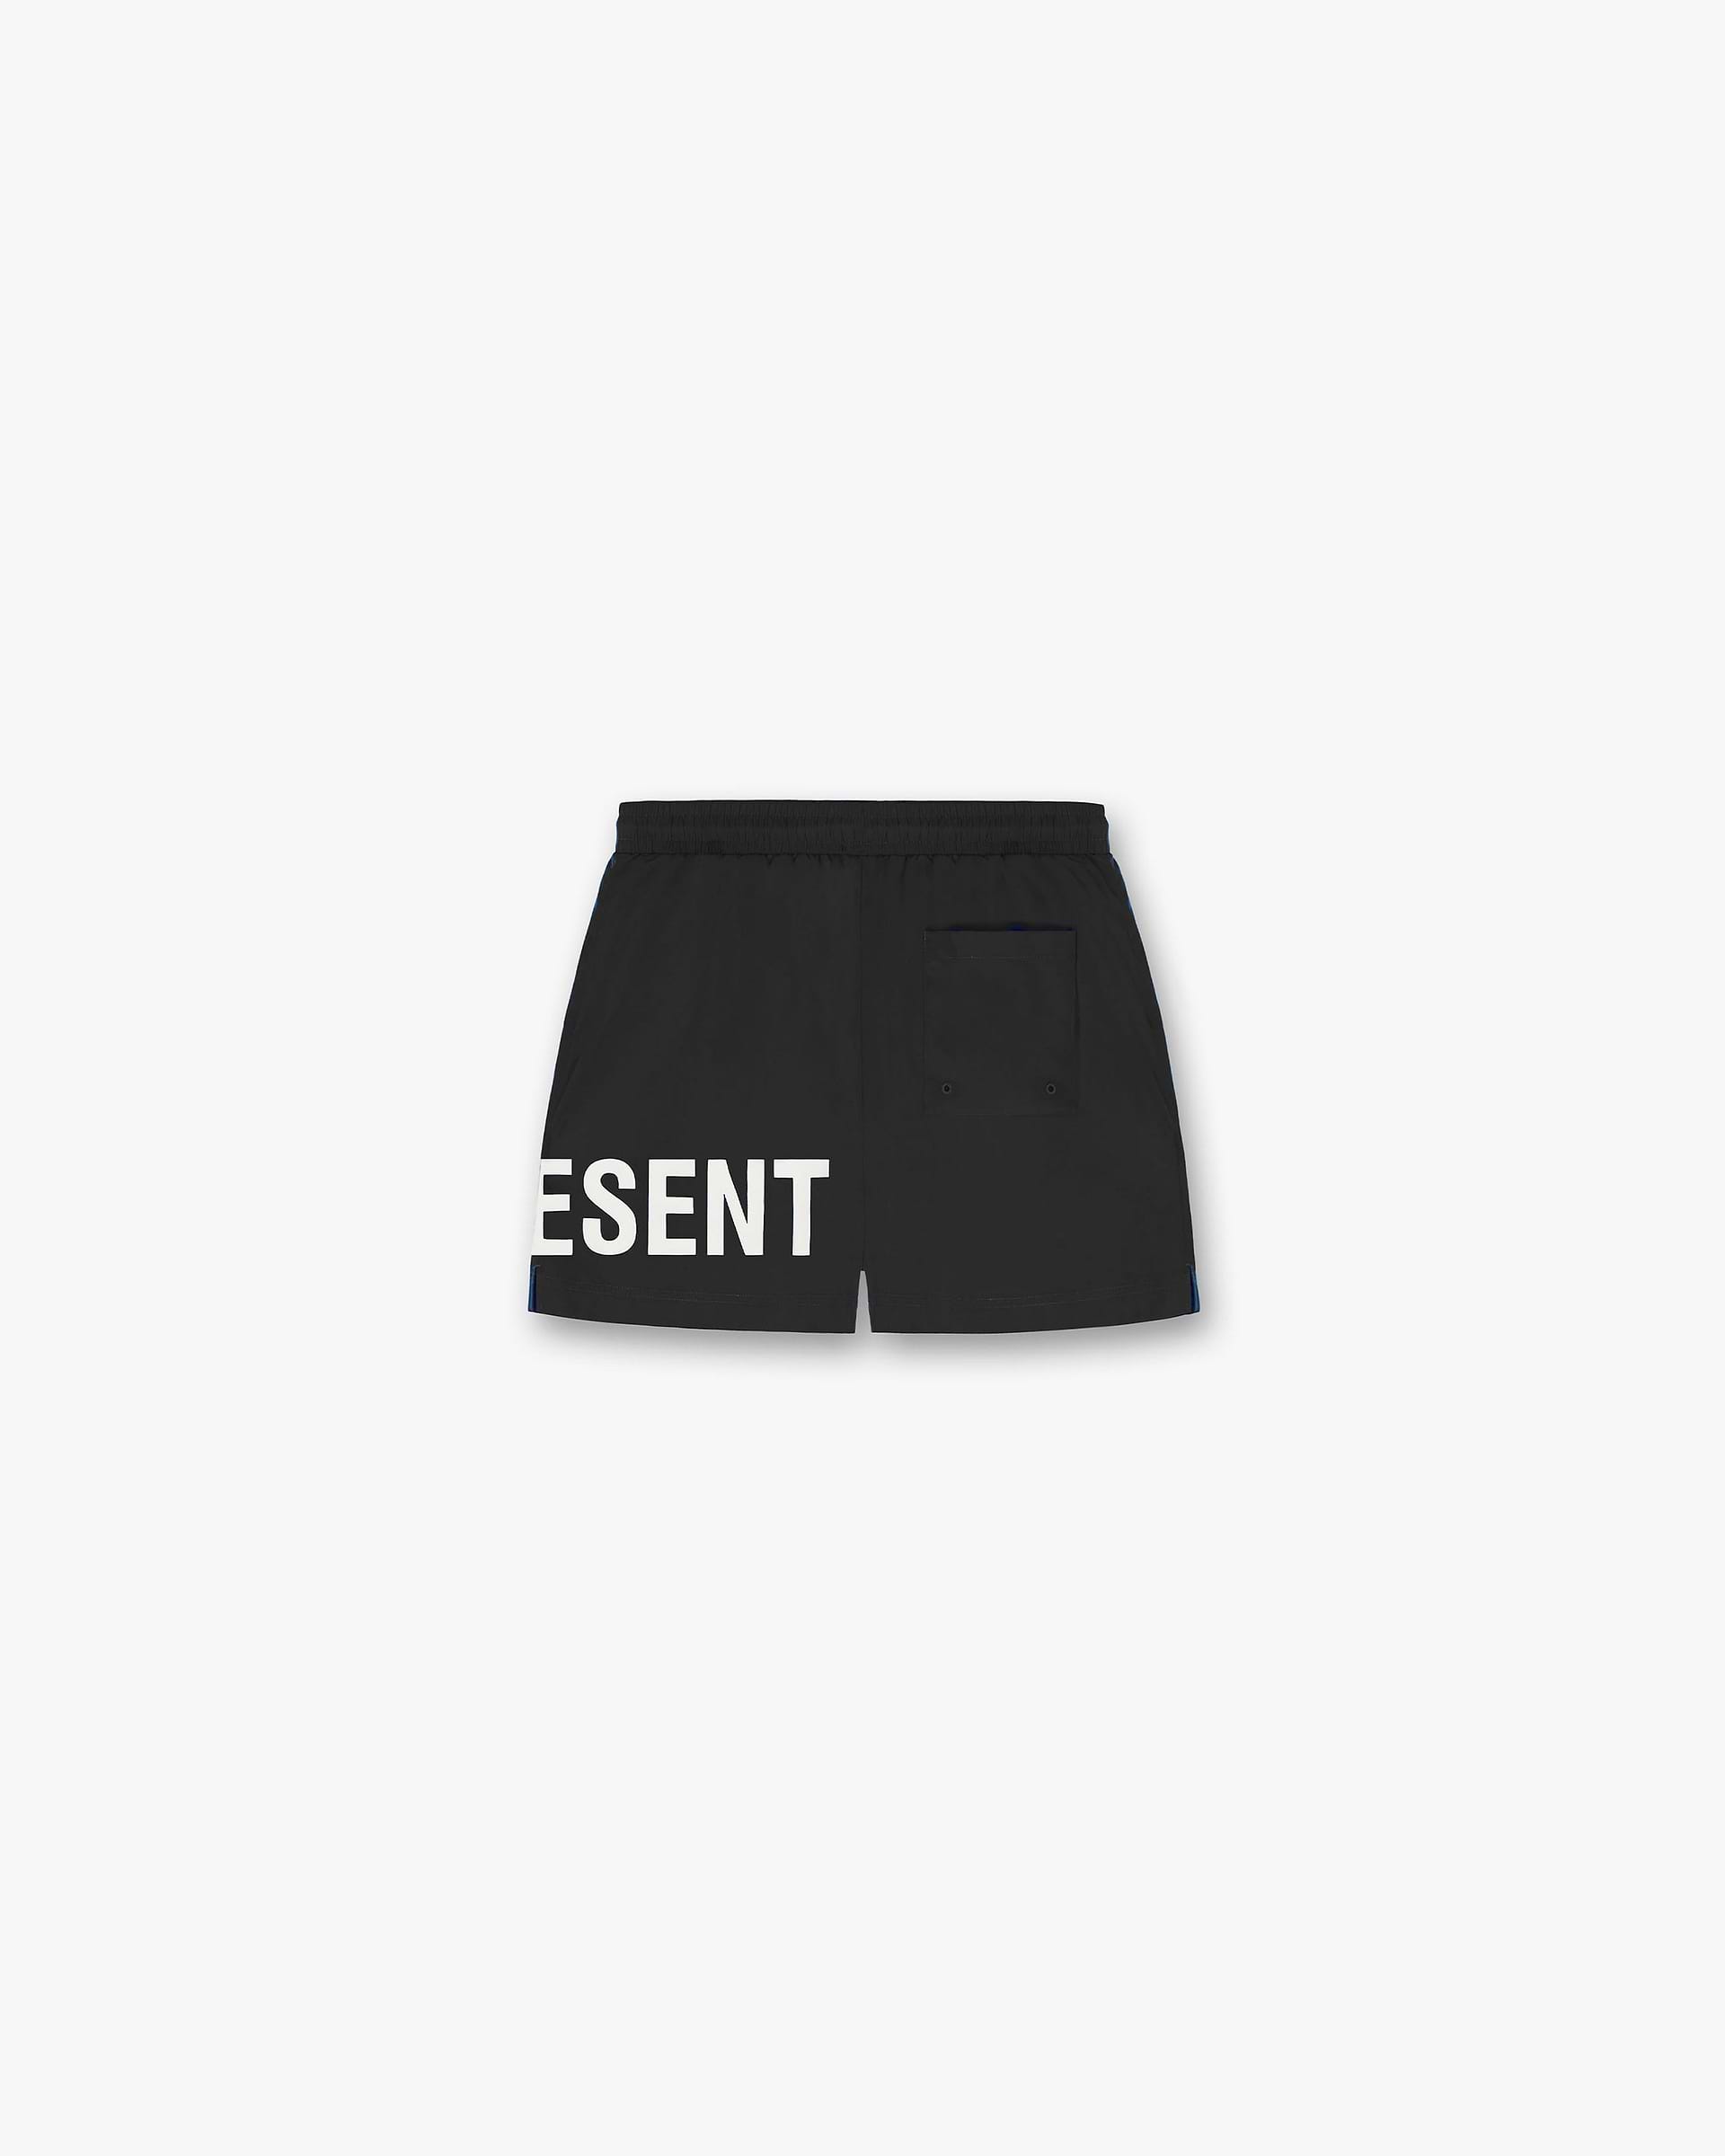 Swim Shorts | Black Shorts SC23 | Represent Clo